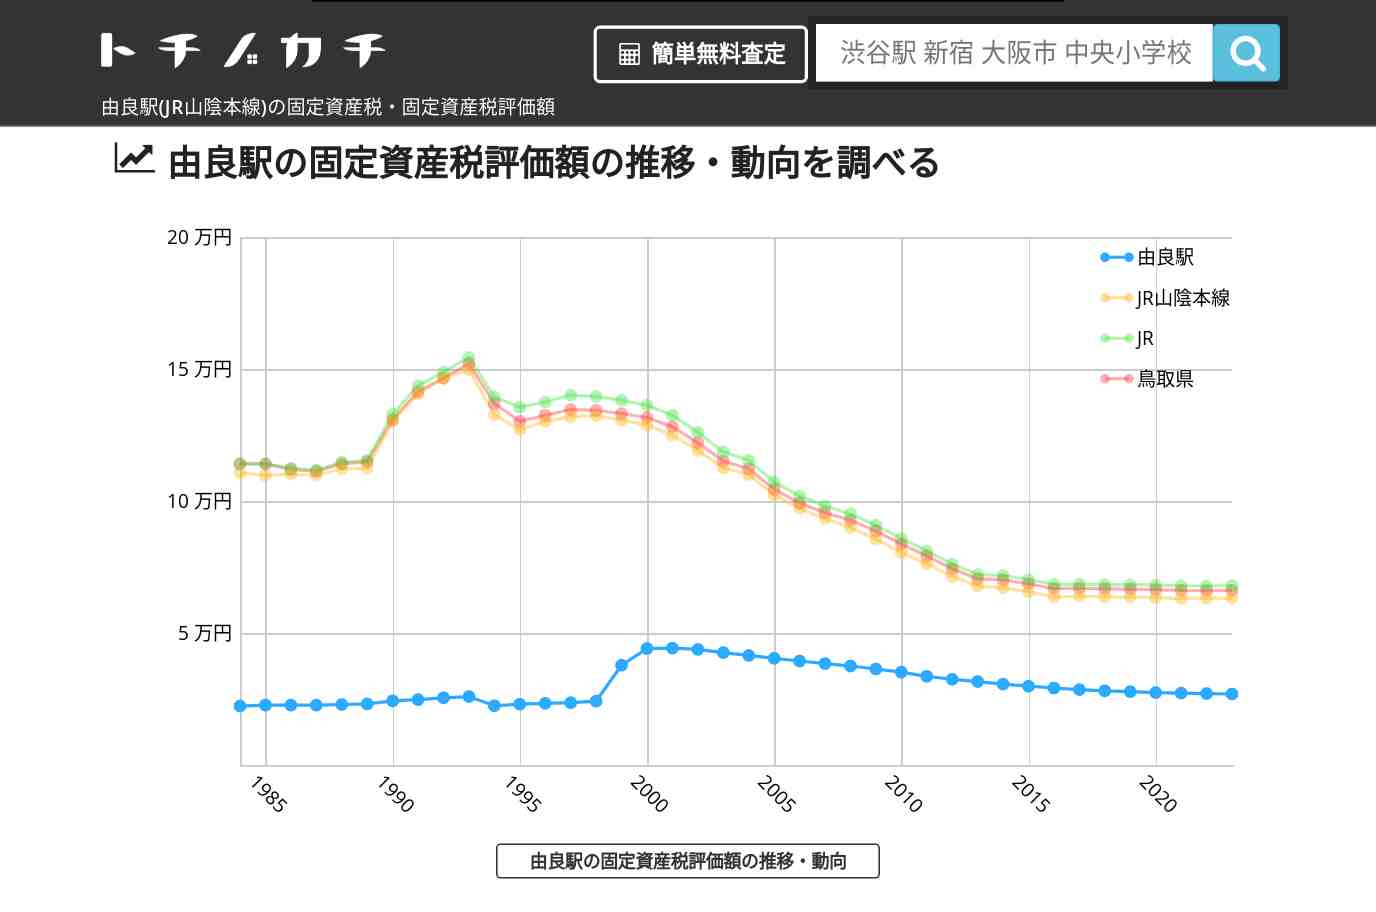 由良駅(JR山陰本線)の固定資産税・固定資産税評価額 | トチノカチ